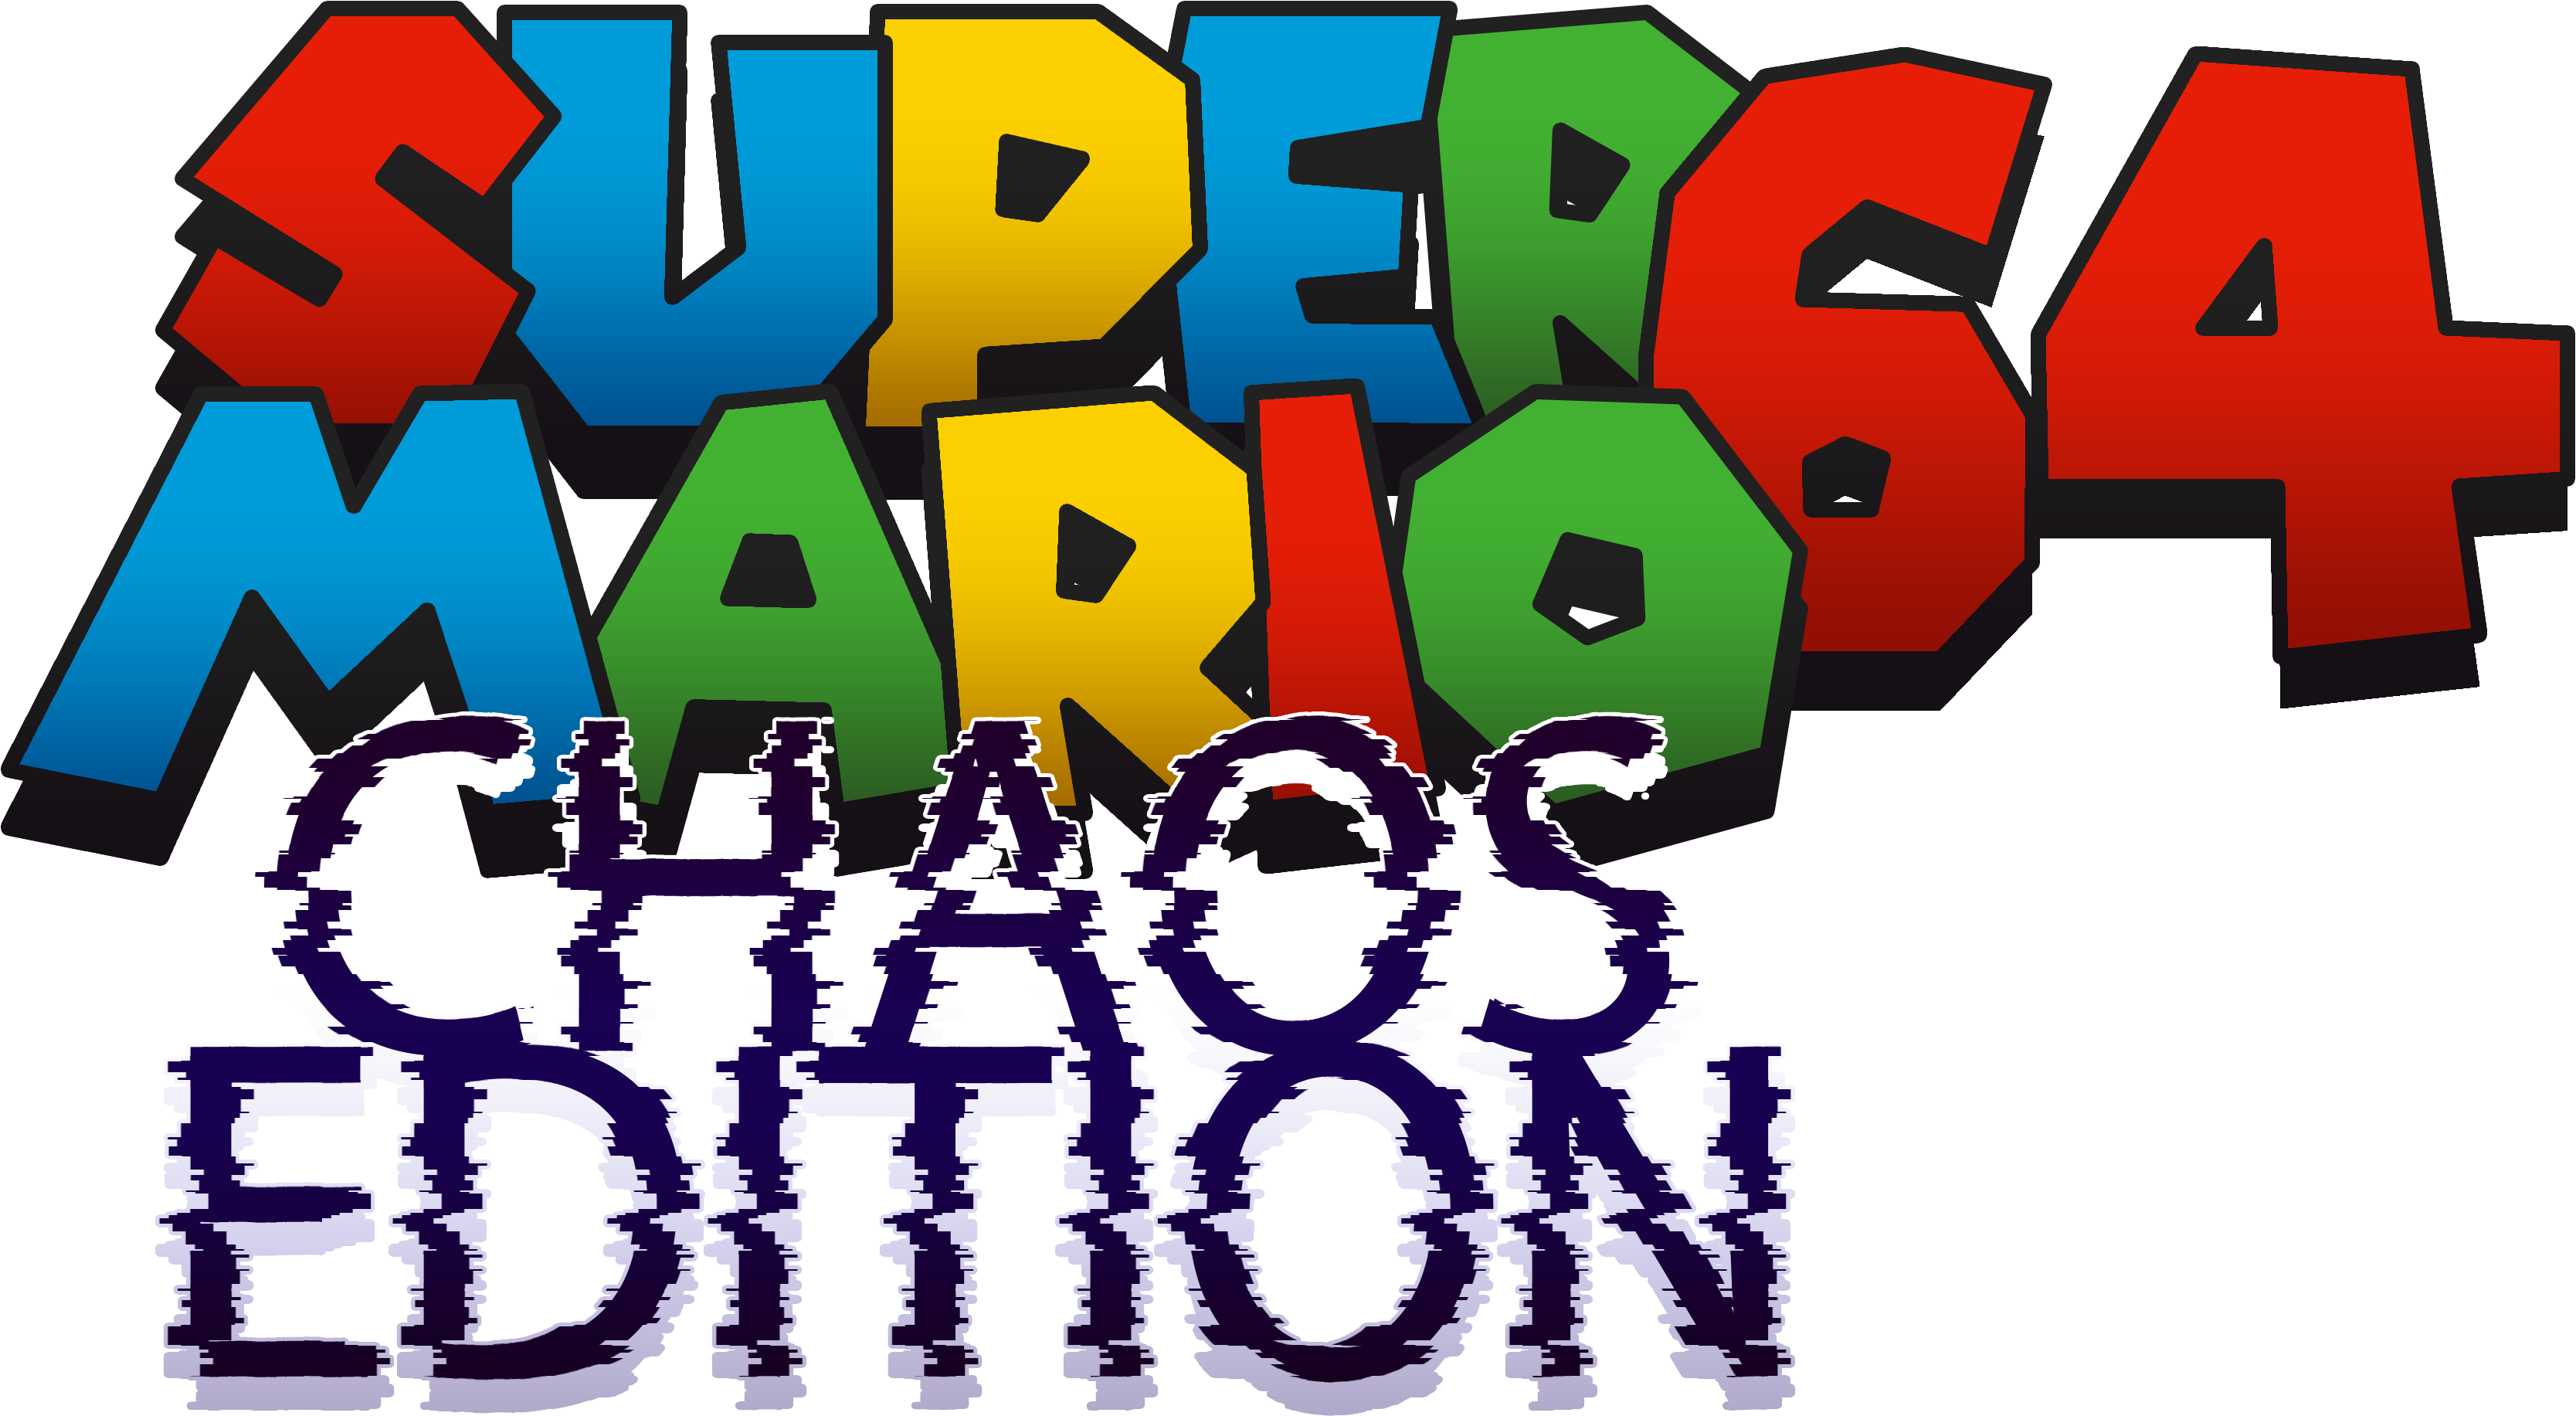 super mario 64 chaos edition update